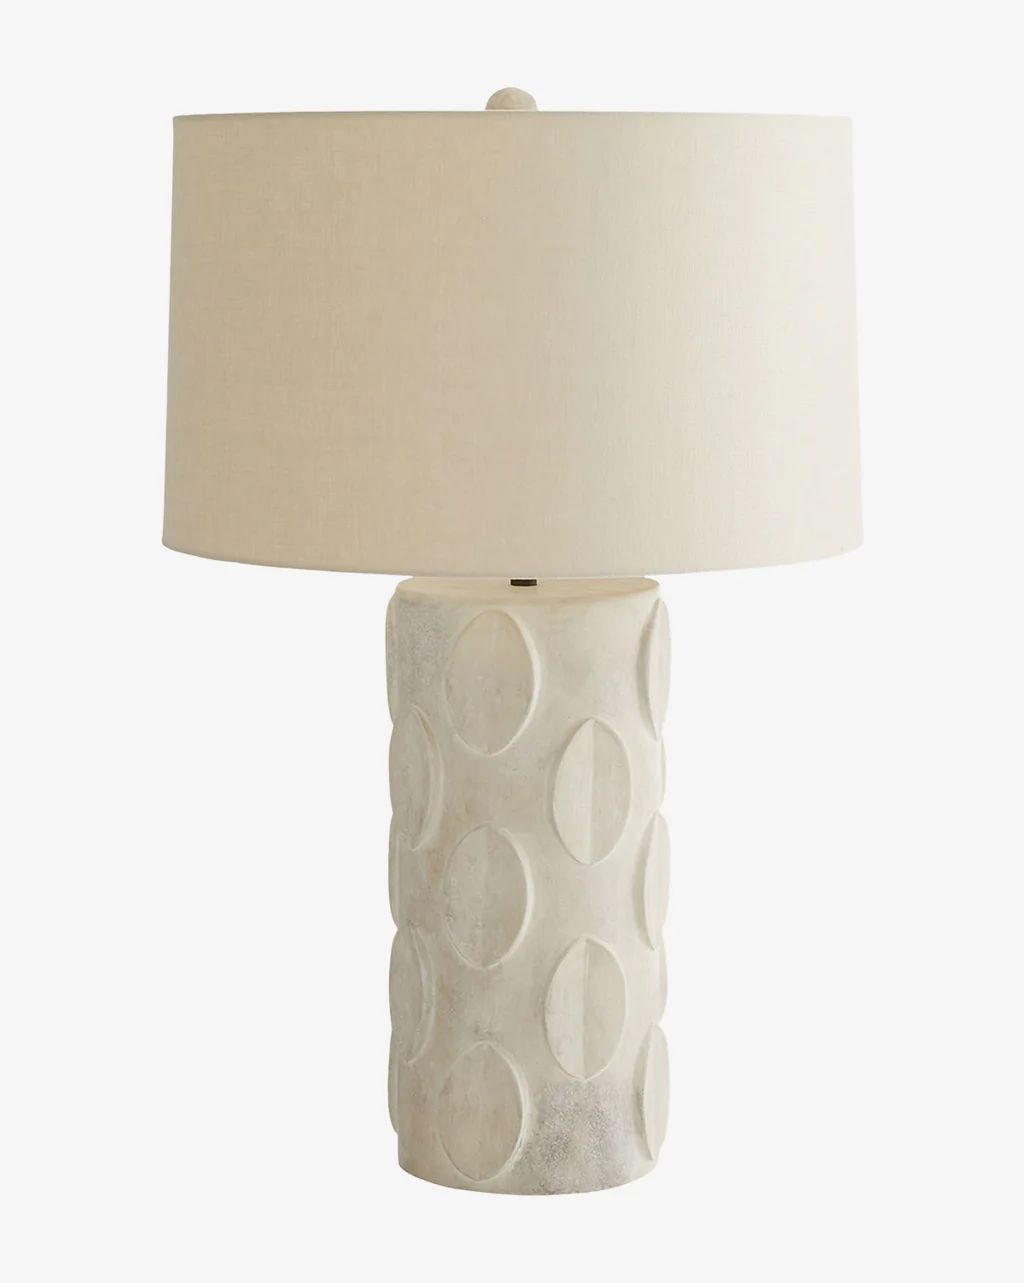 Jardanna Table Lamp | McGee & Co.